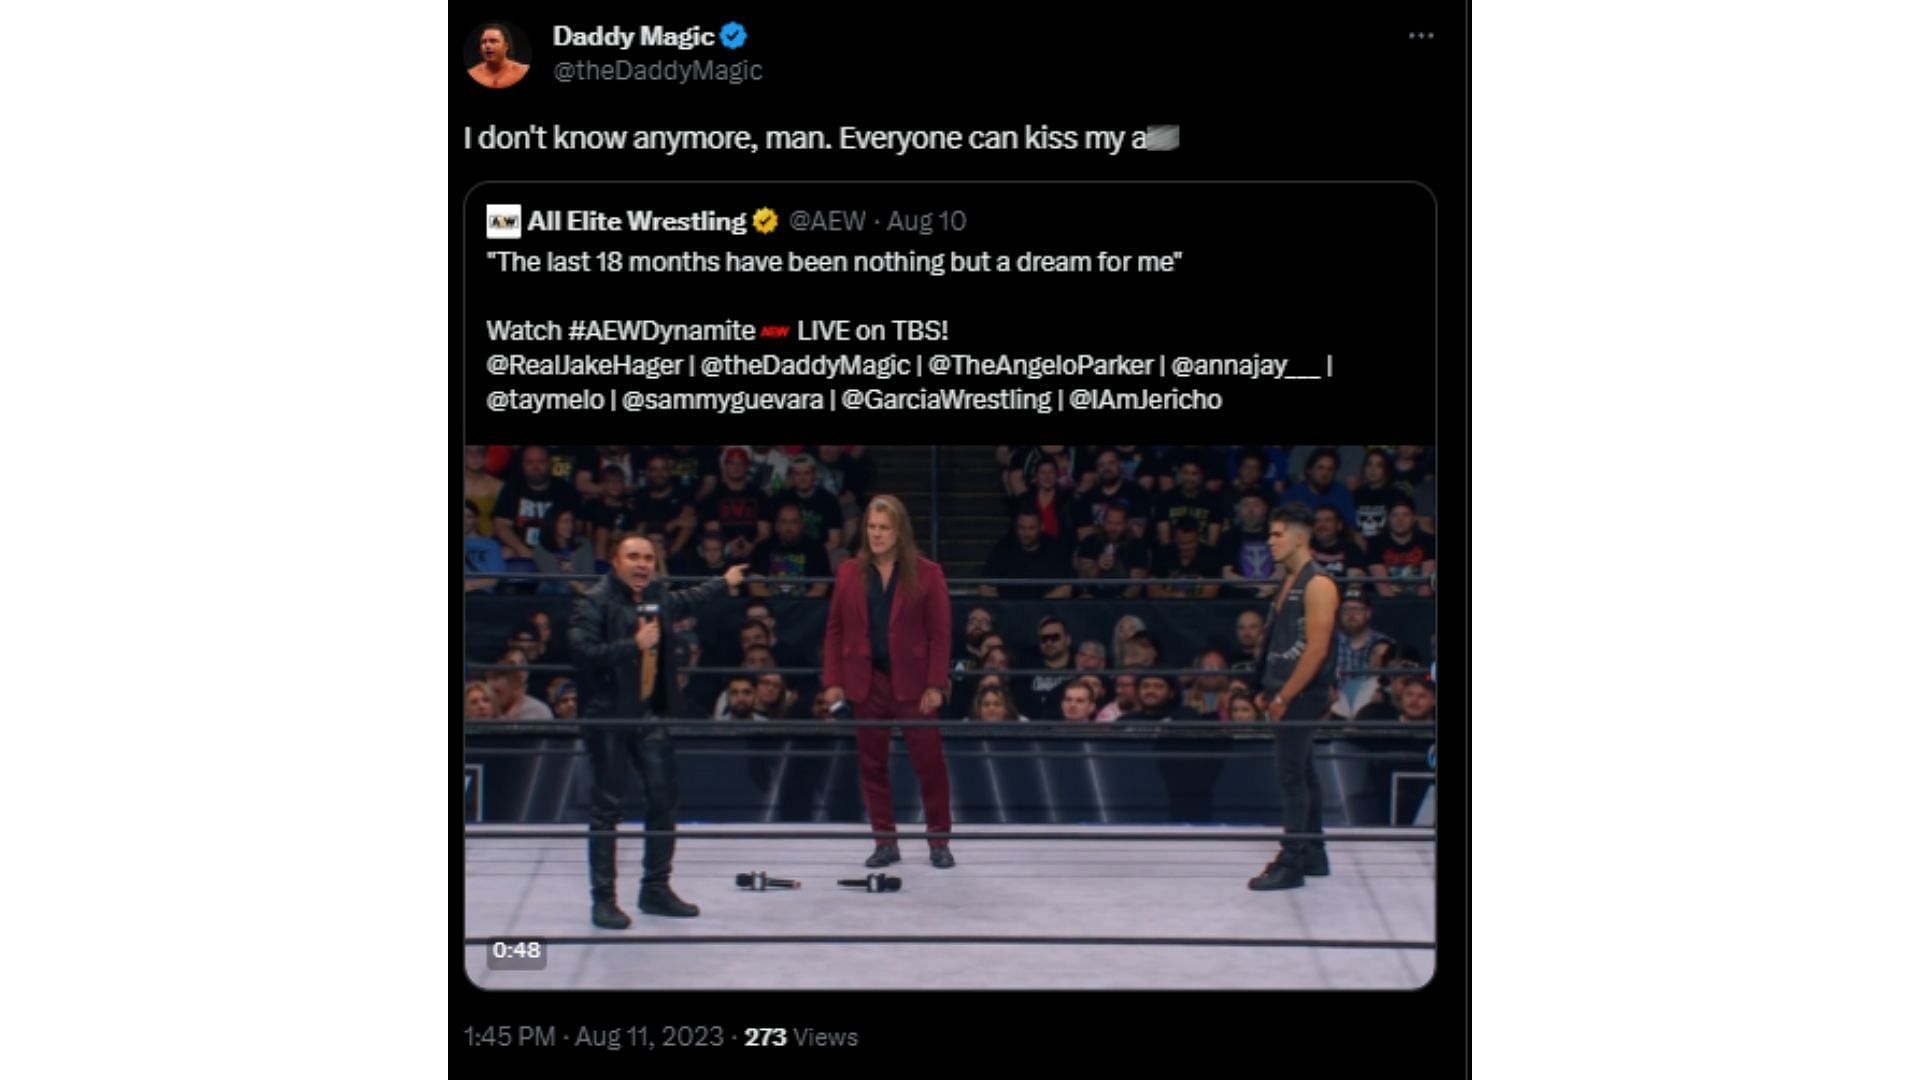 Has Daddy Magic had enough of Chris Jericho?